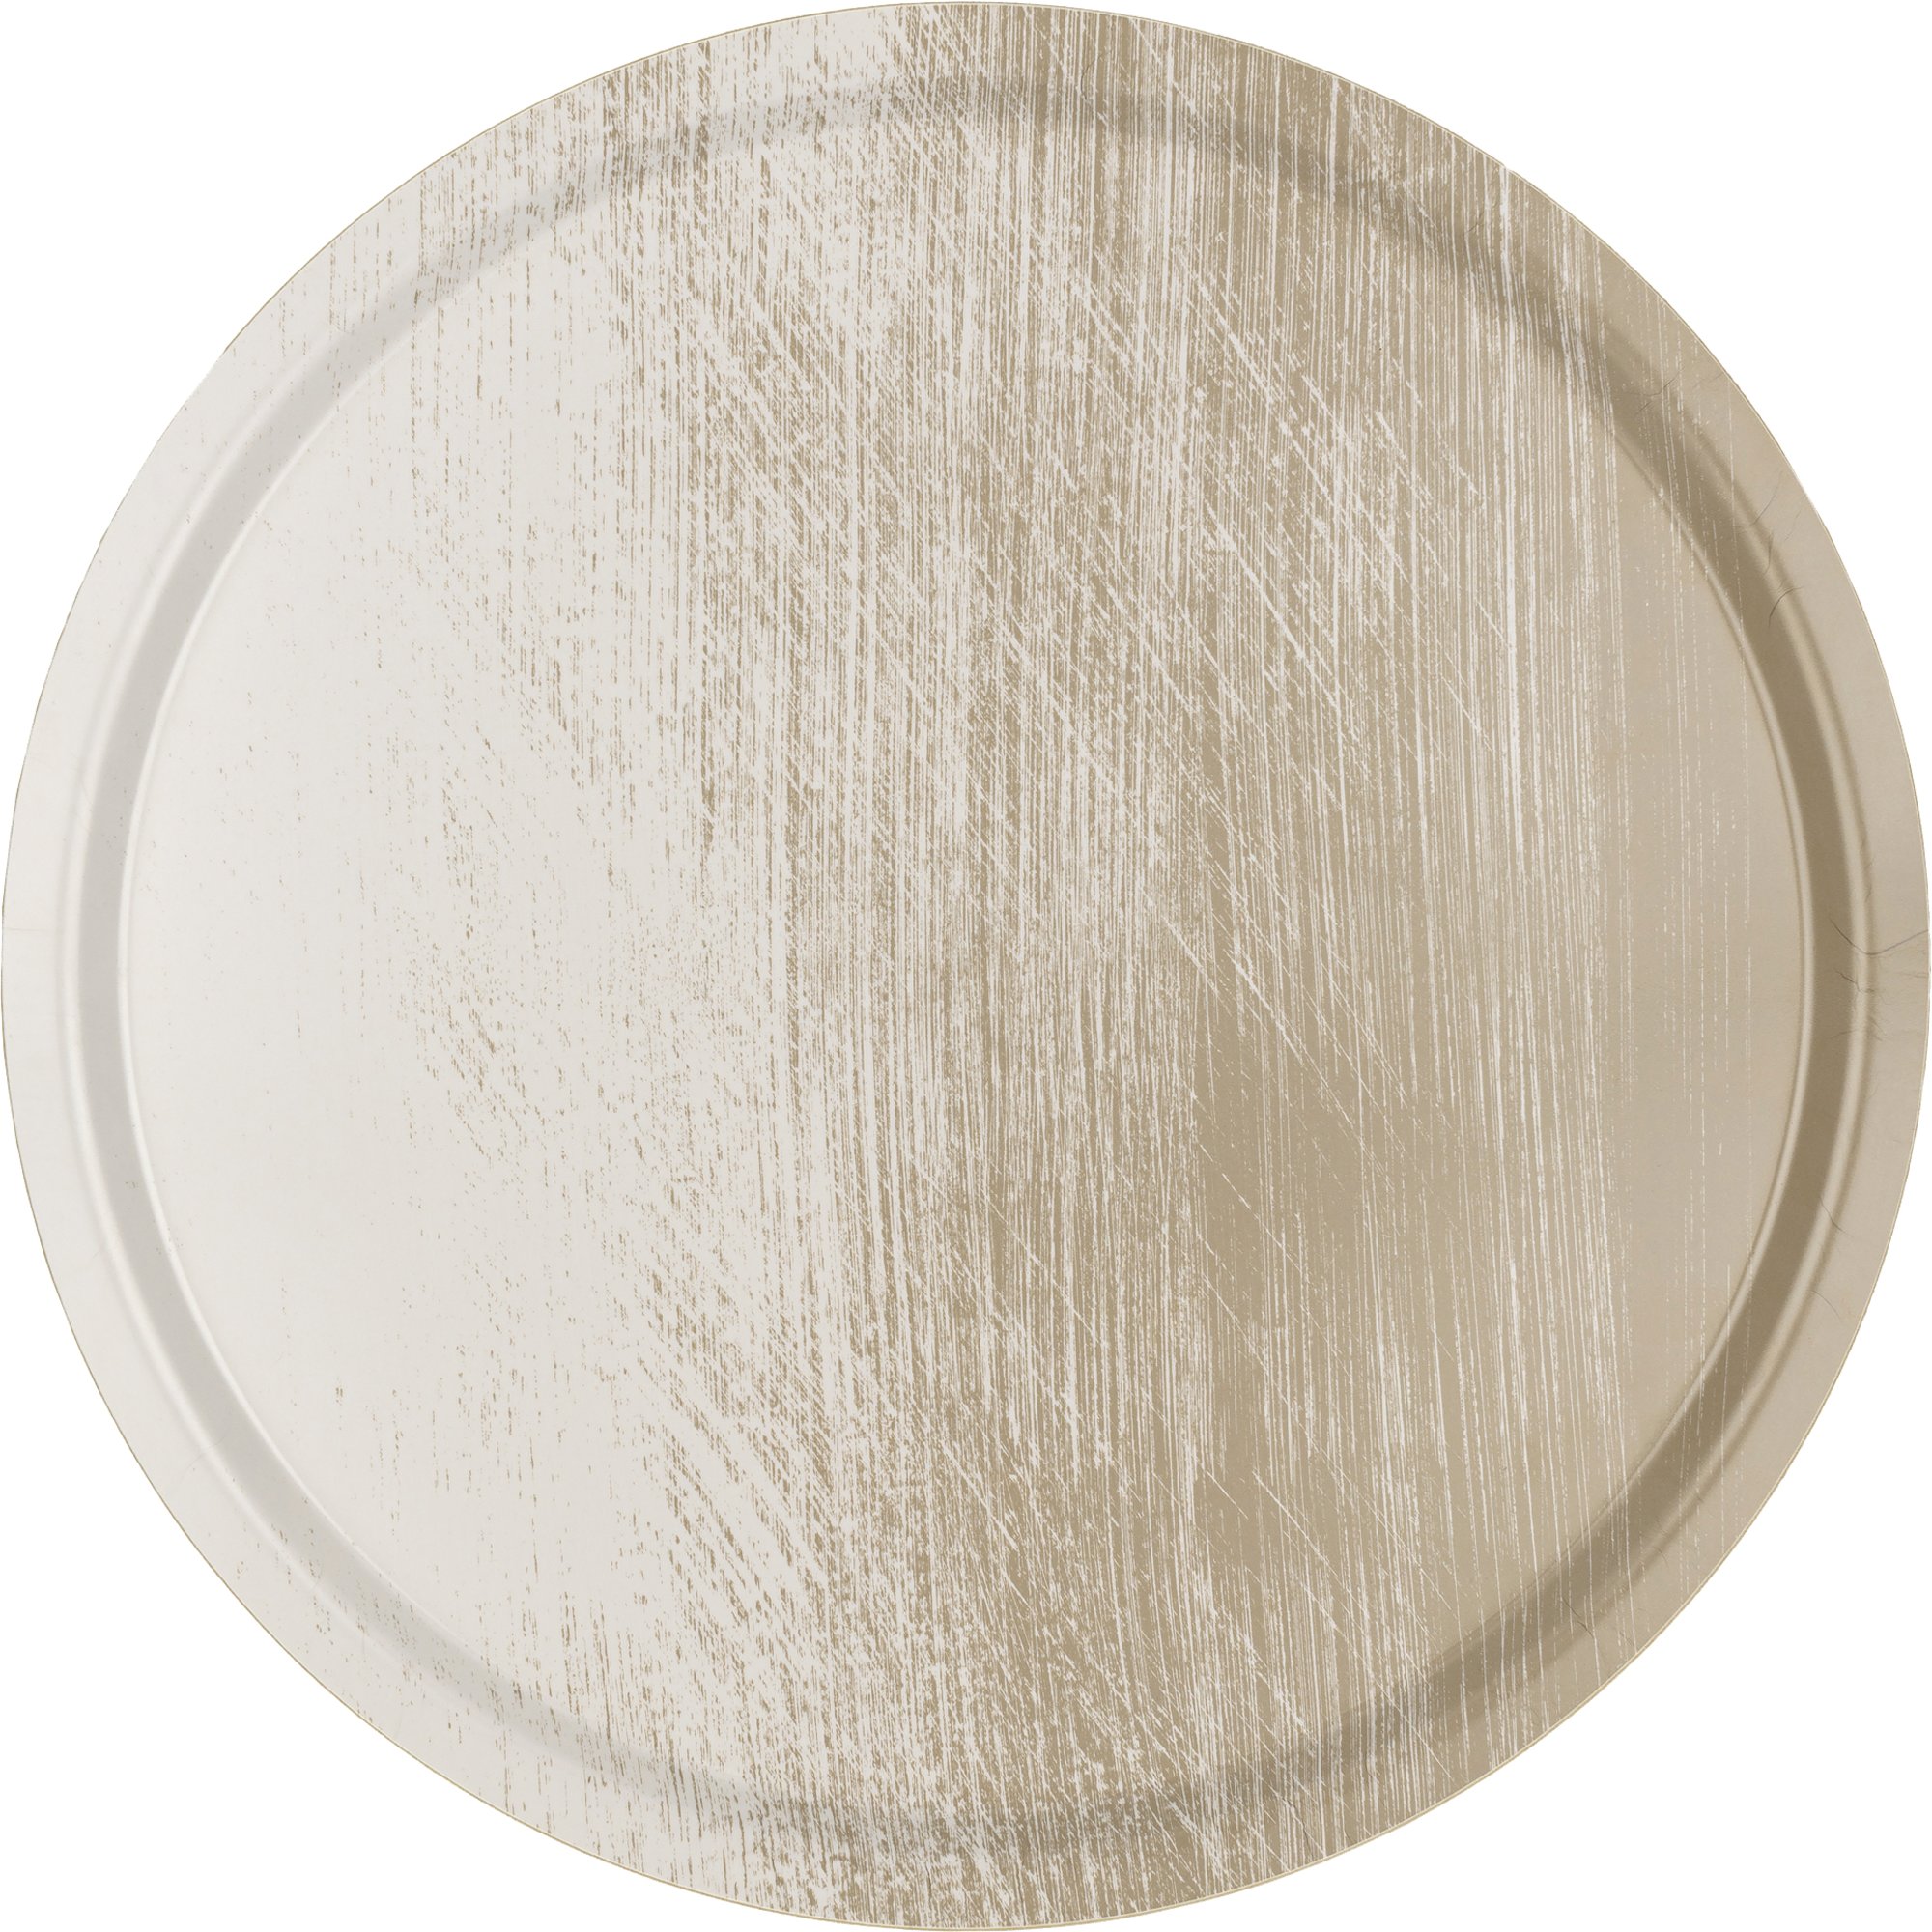 Marimekko Kuiskaus bakke, 46 cm, hvid/ler